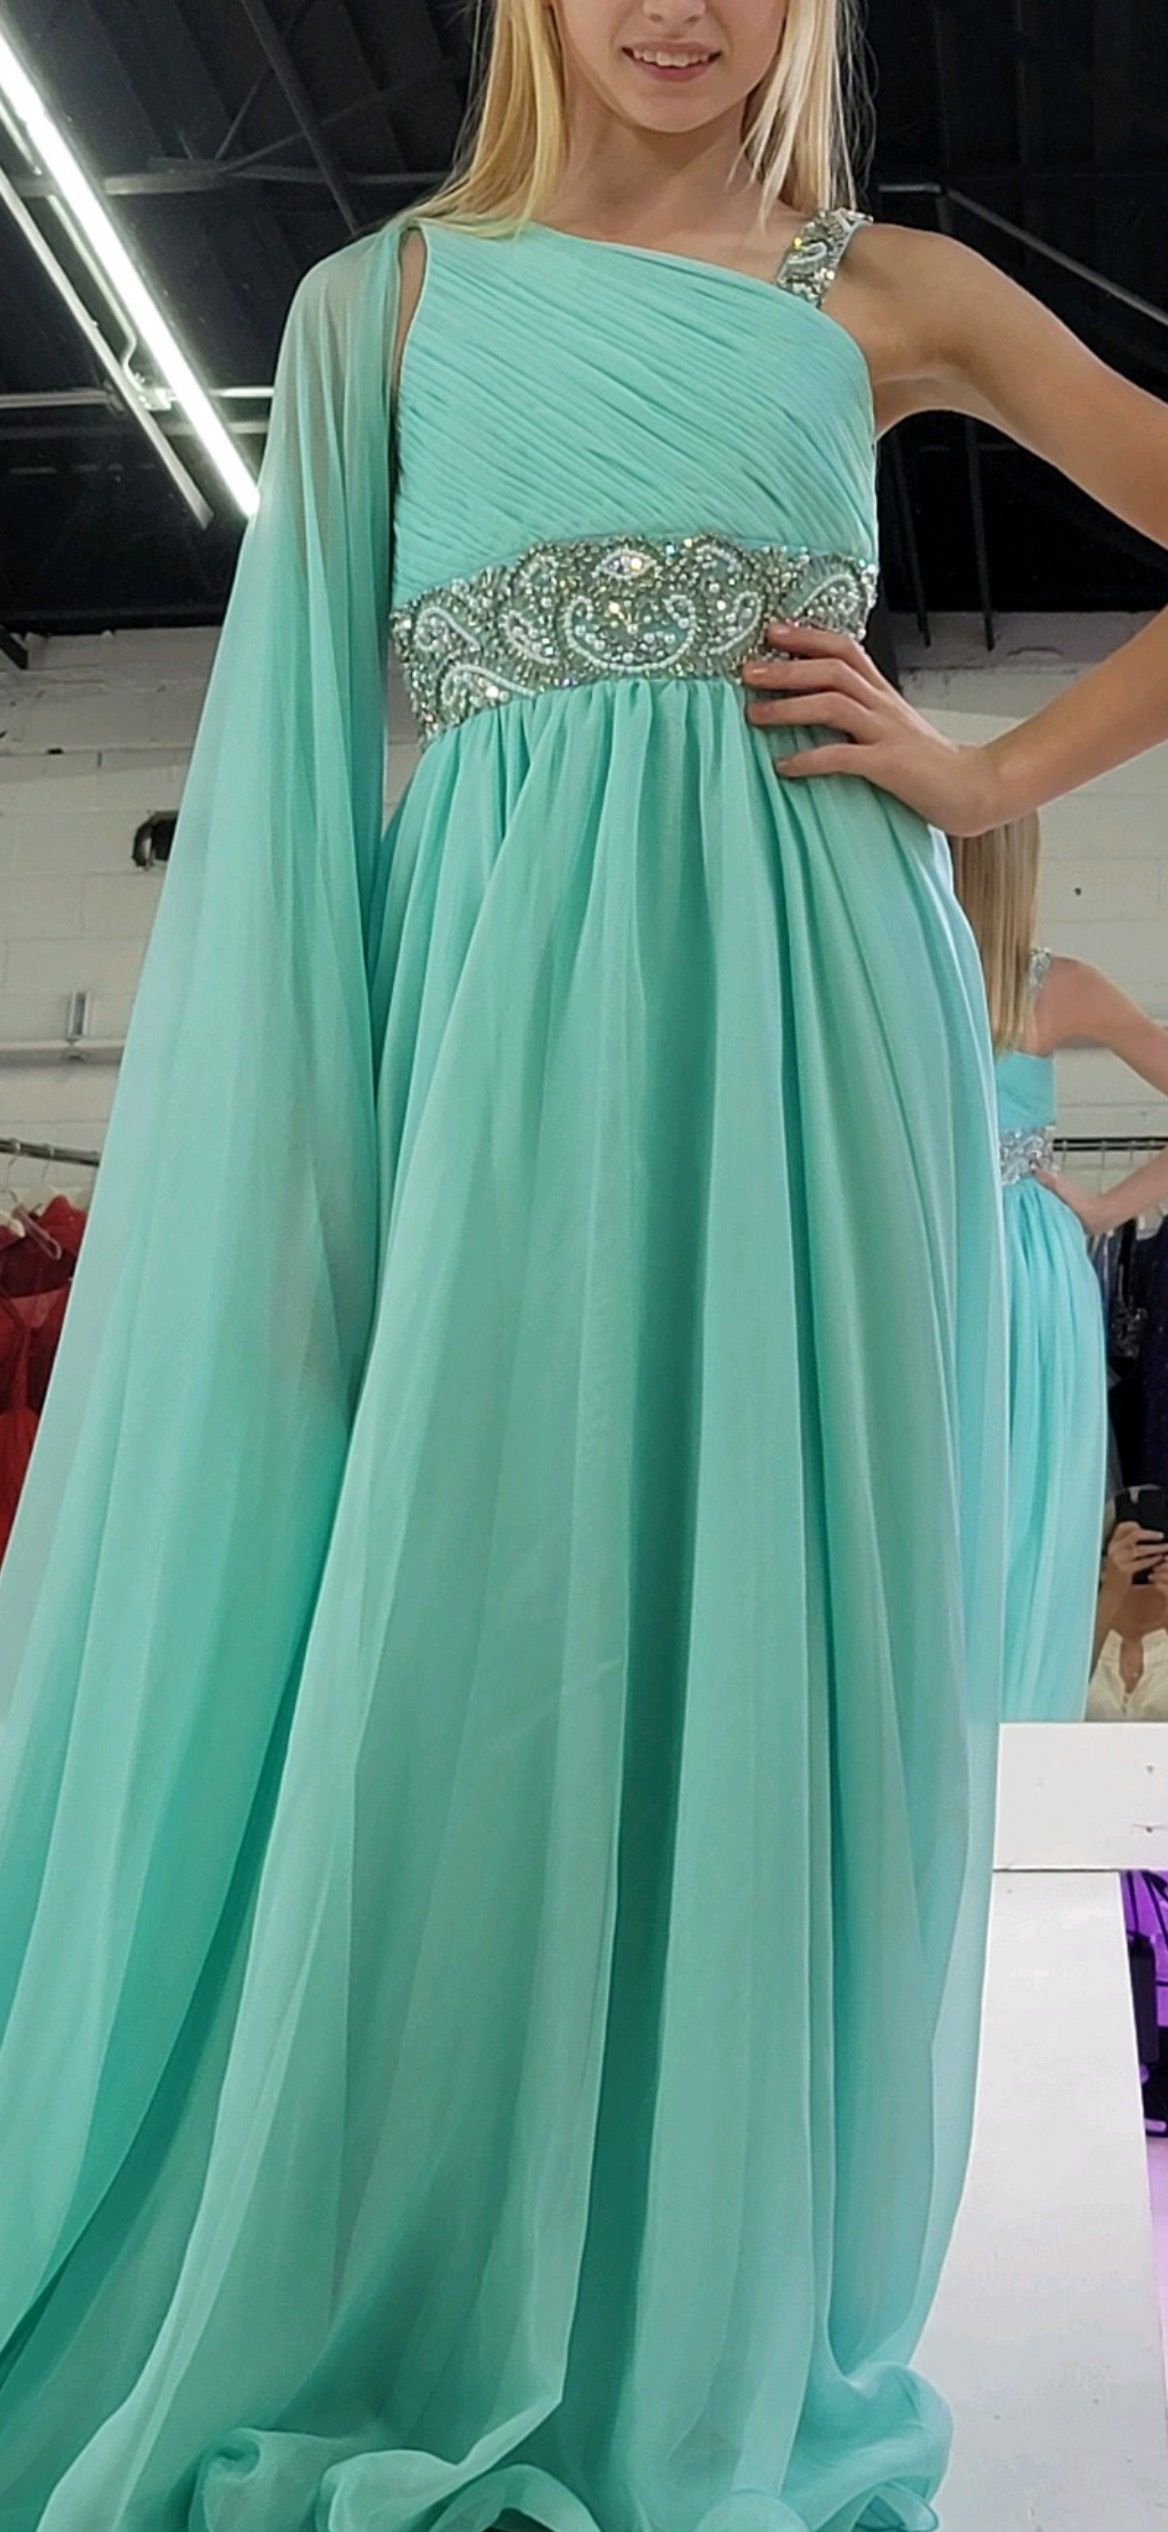 Ashley Lauren Girls Size 8 Prom Light Green A-line Dress on Queenly